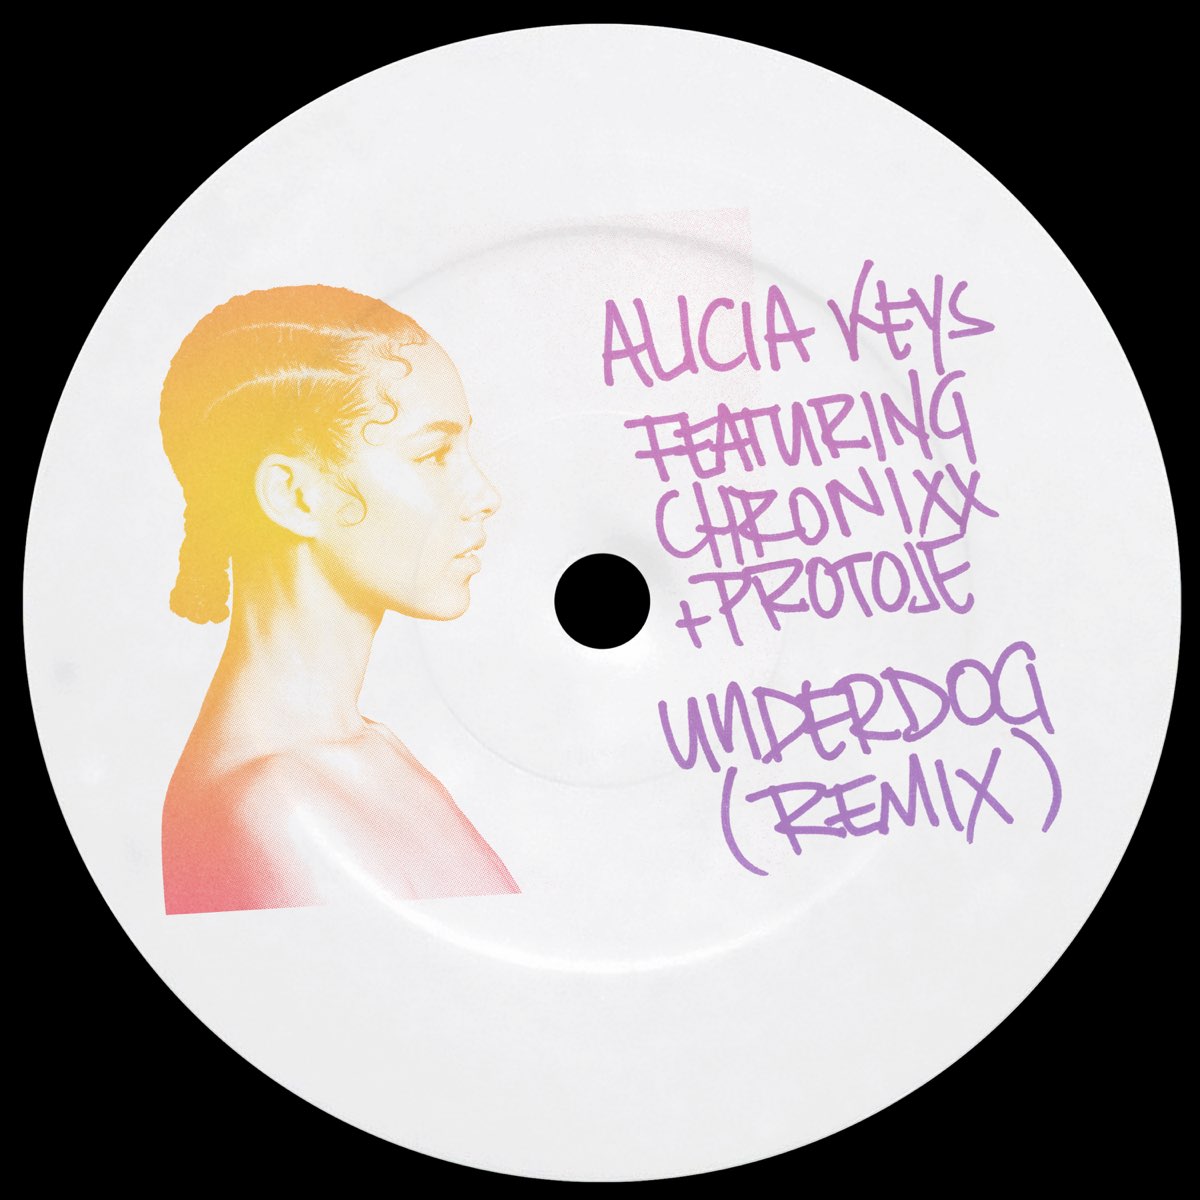 Underdog (Remix) [feat. Chronixx & Protoje] - Single - Album by Alicia Keys  - Apple Music